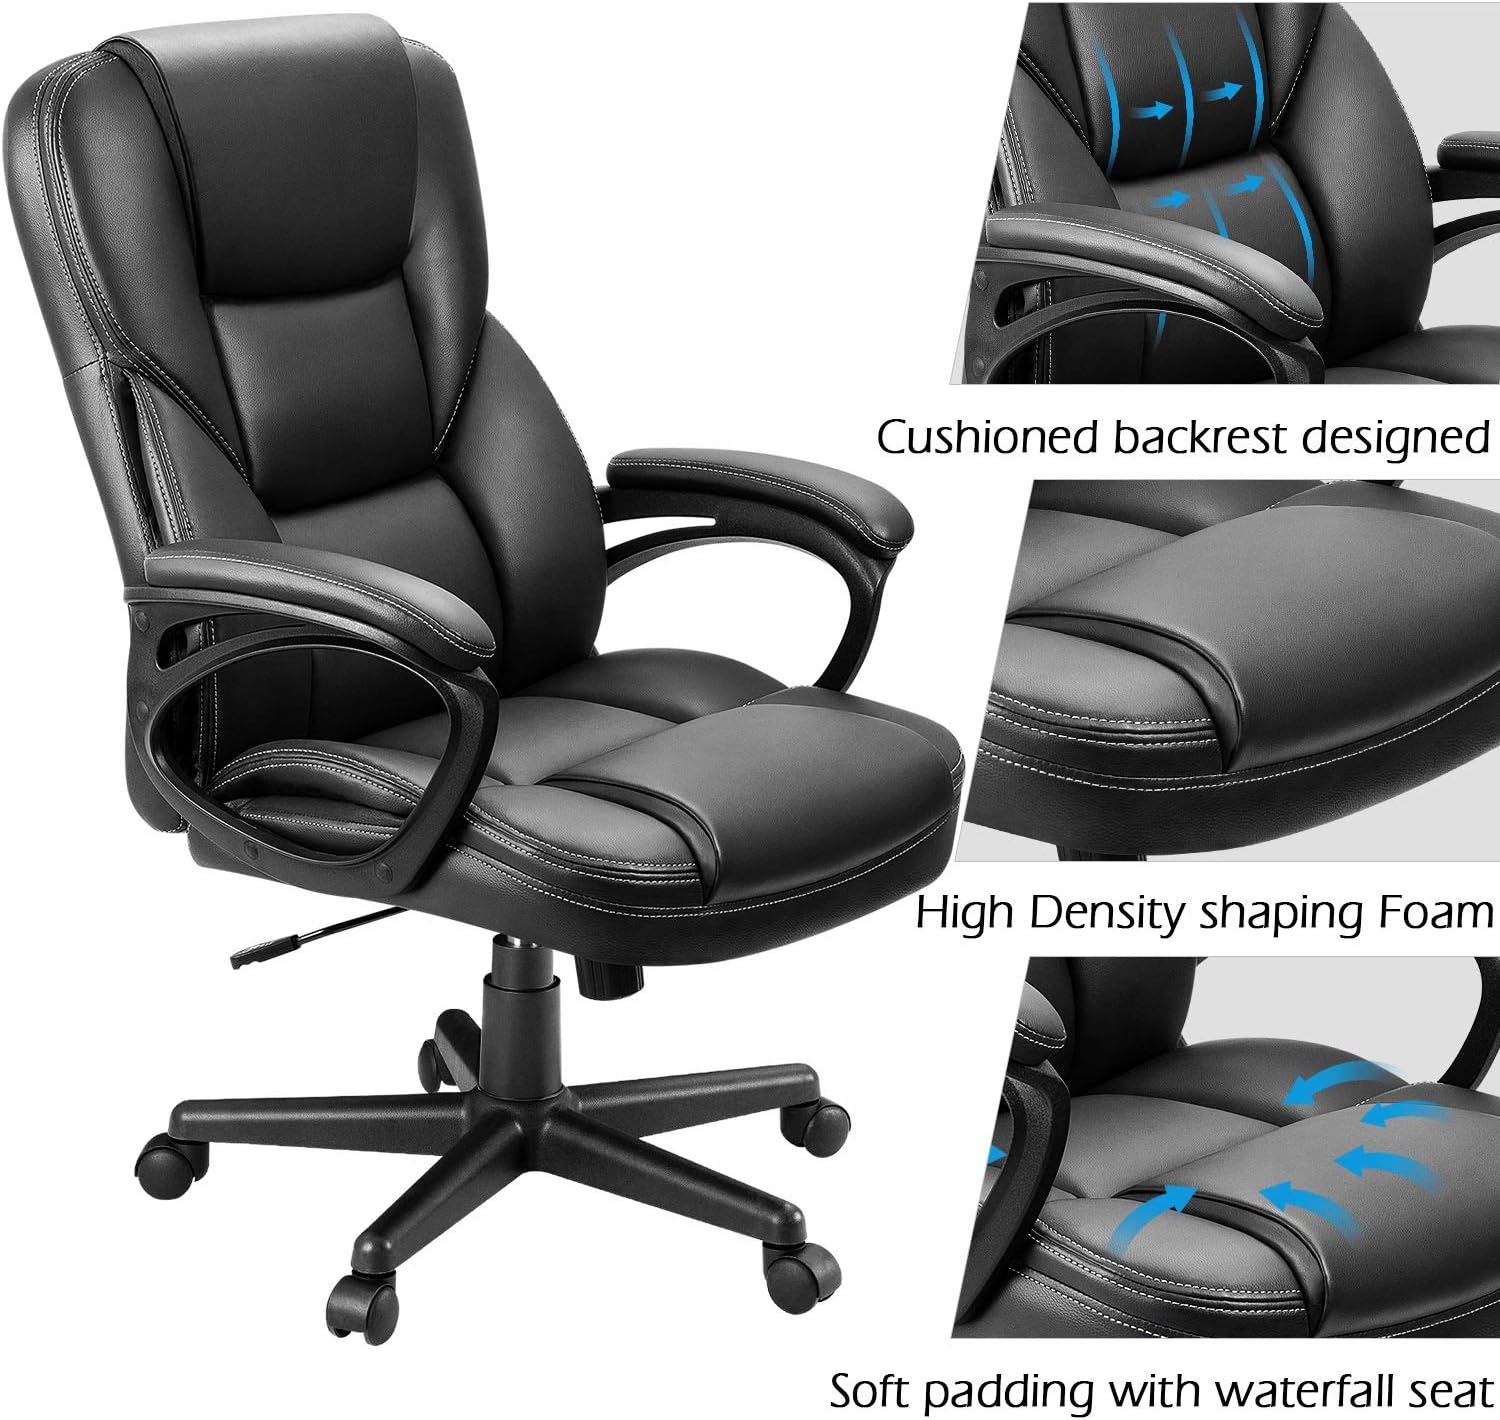 Silla ejecutiva de oficina con respaldo alto, ajustable, silla de escritorio